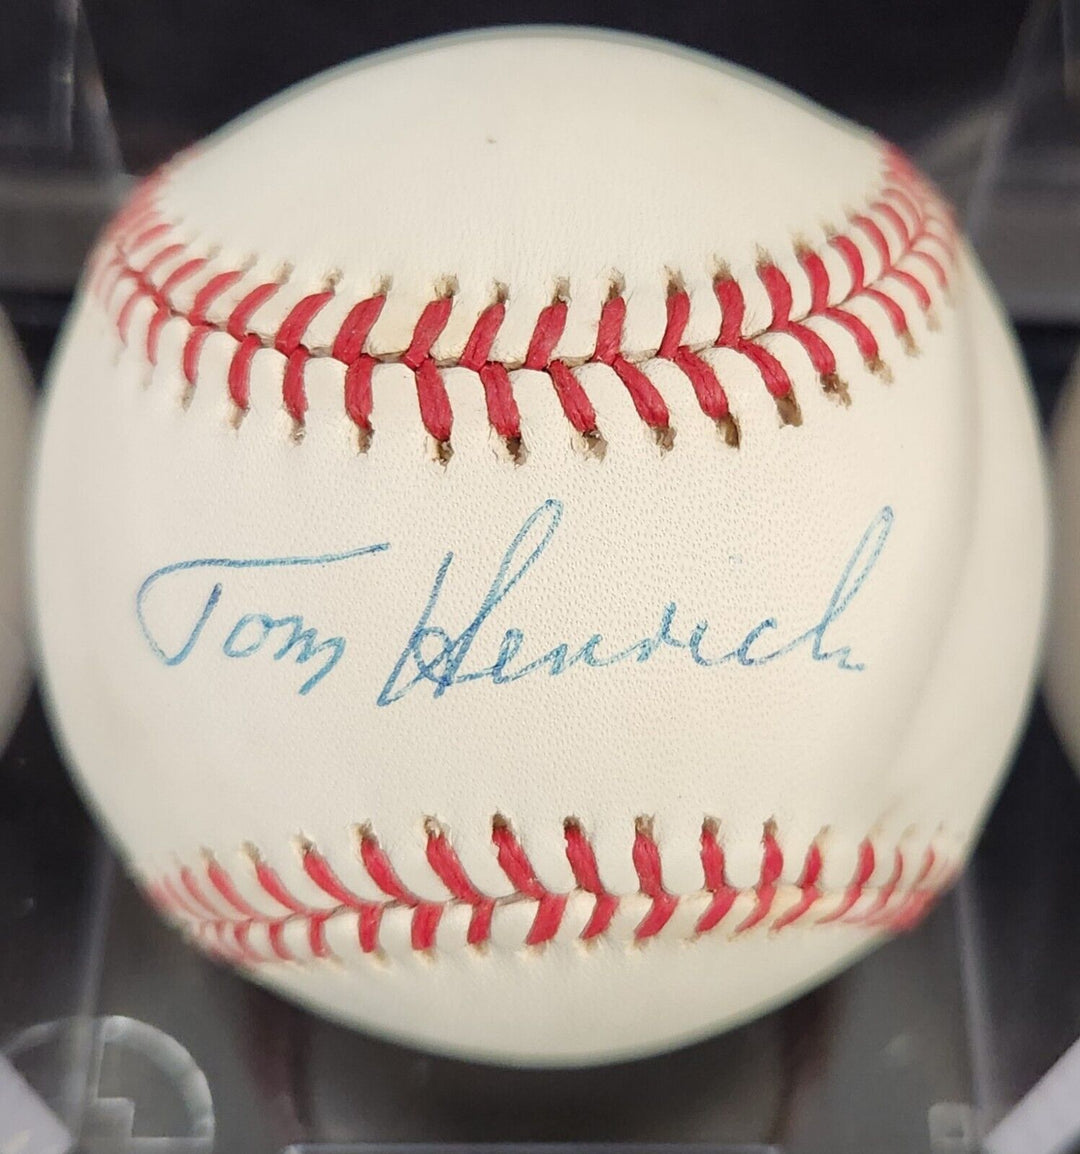 Tommy Henrich Signed American League Baseball New York Yankees COA